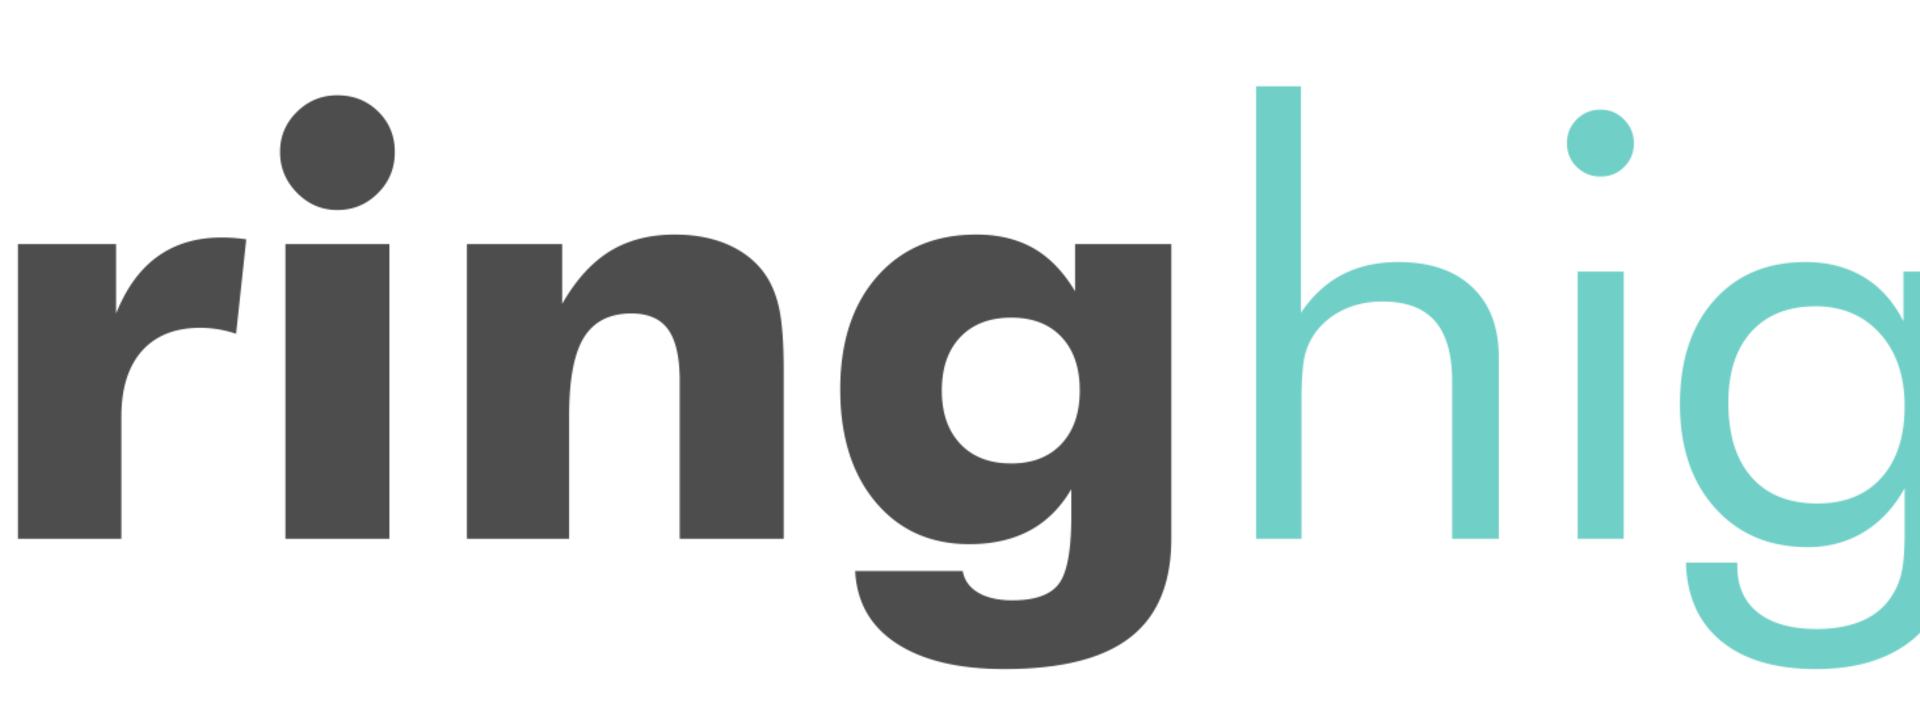 Touring Highlights Logo.png